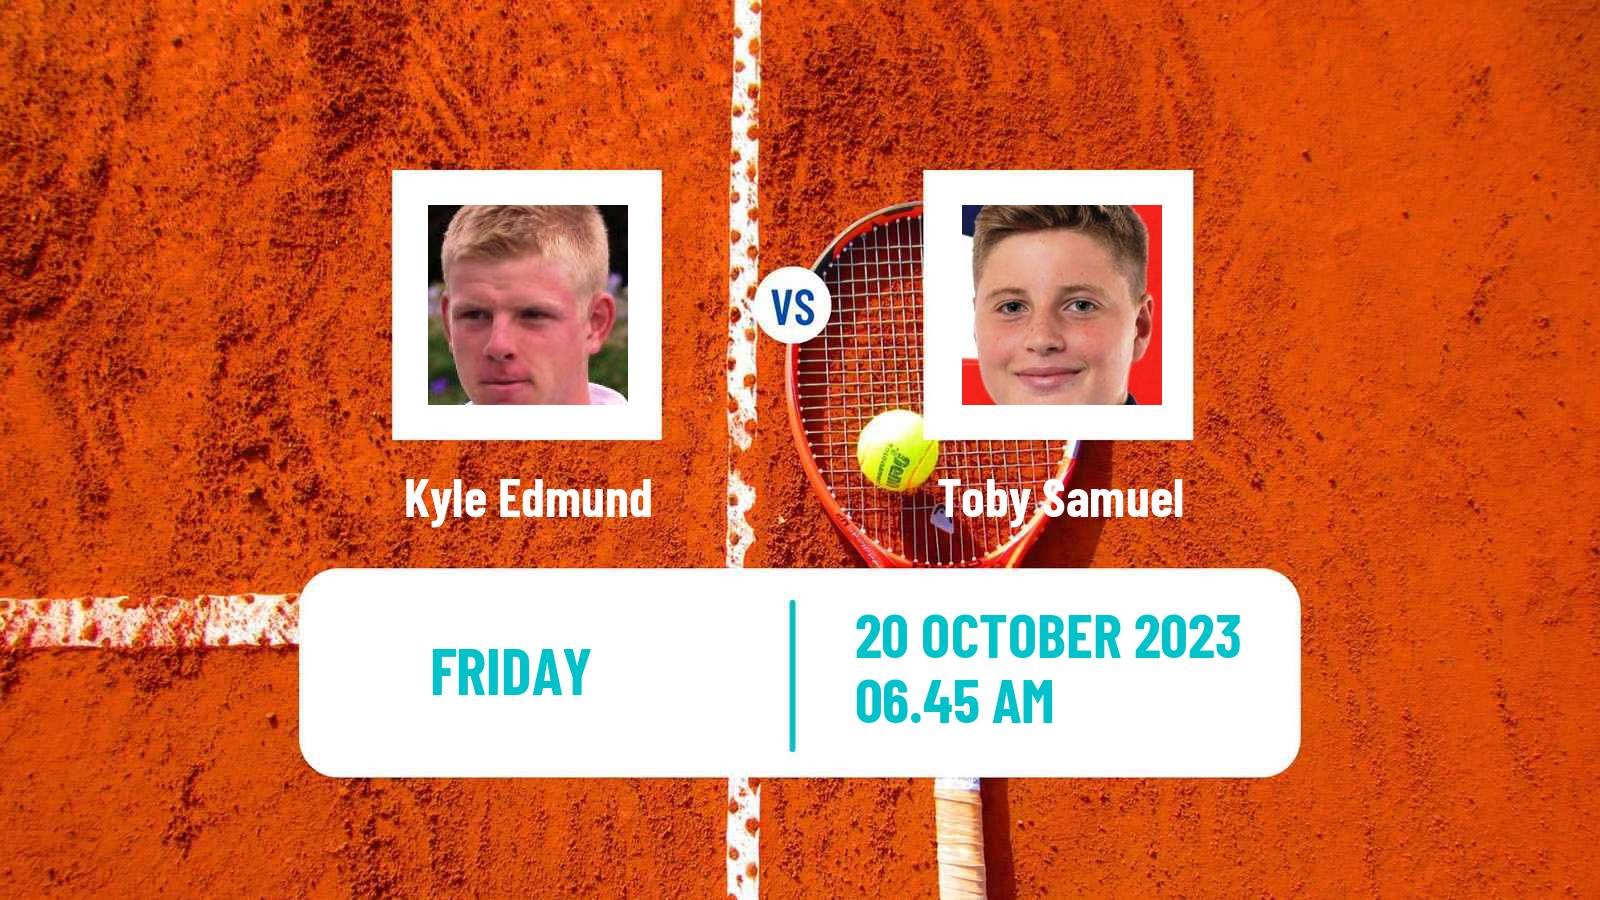 Tennis ITF M25 Edgbaston Men Kyle Edmund - Toby Samuel